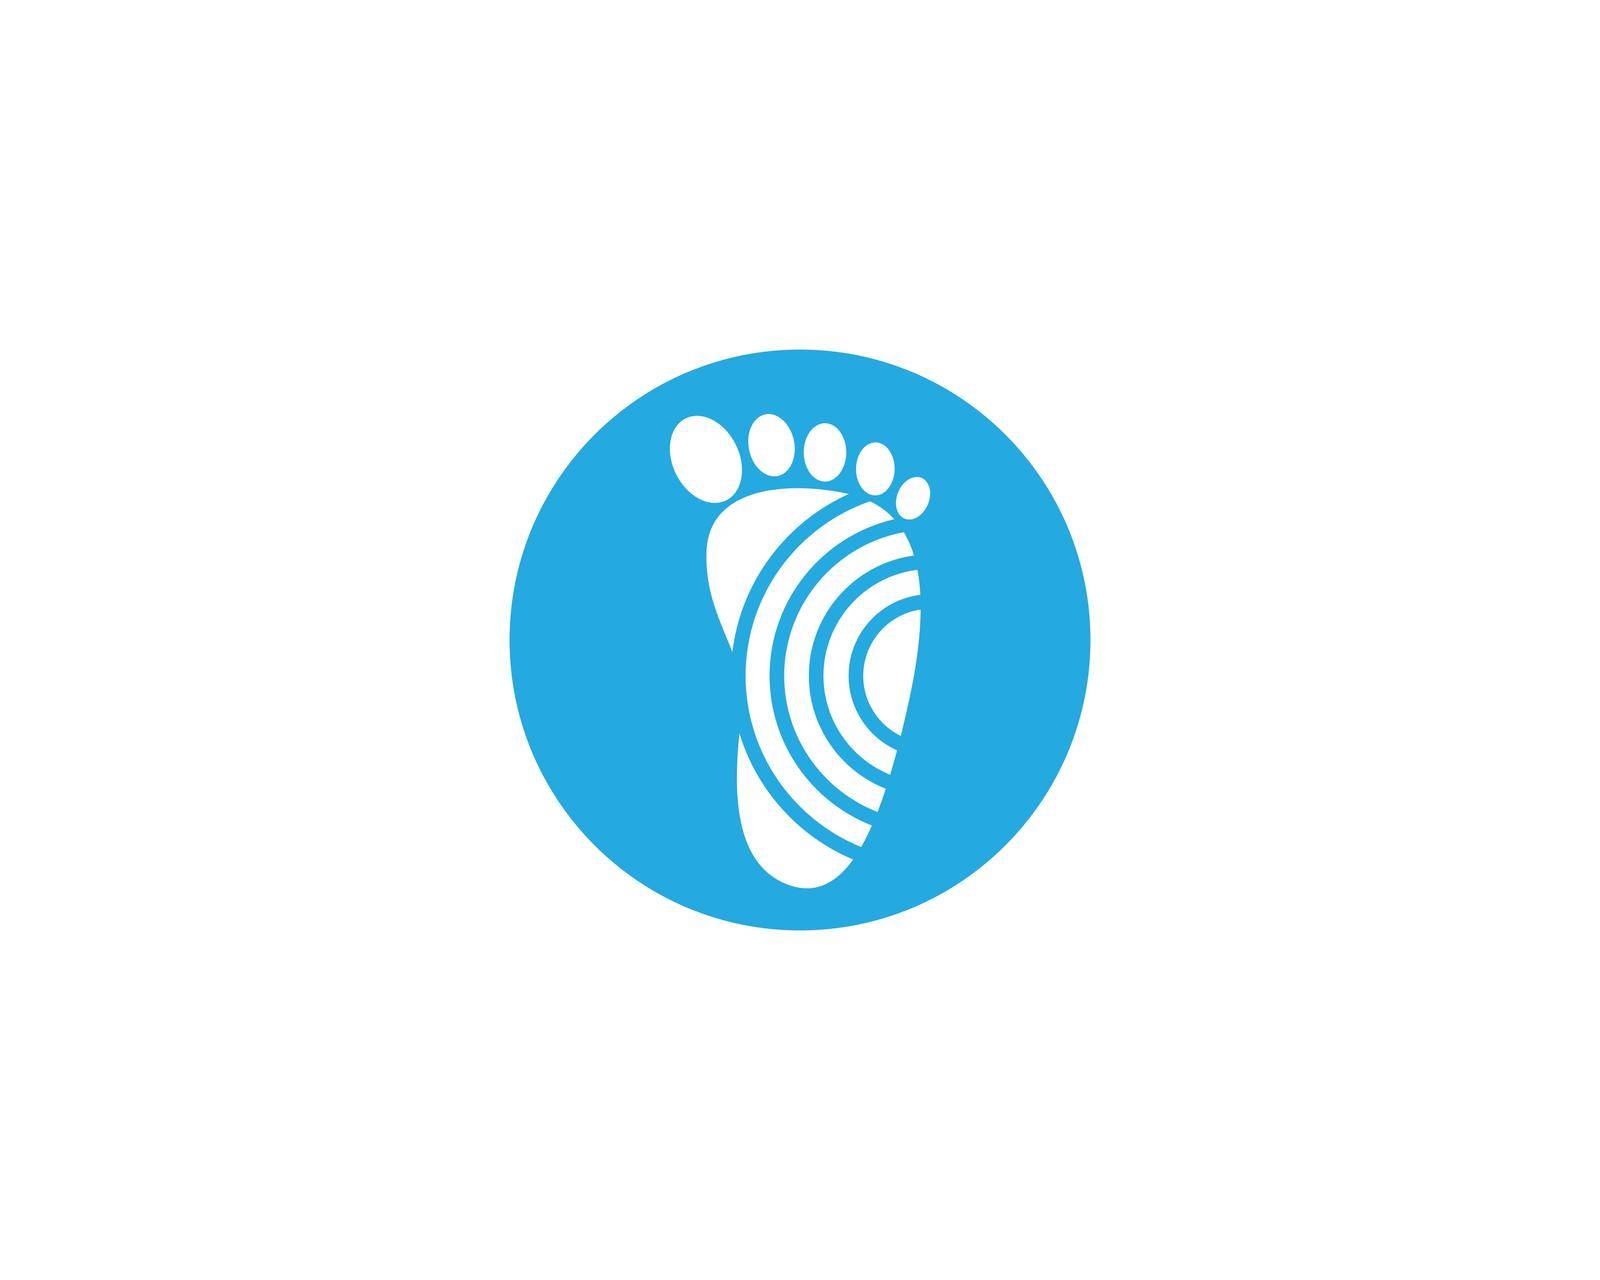 Foot therapist logo vector by Attades19